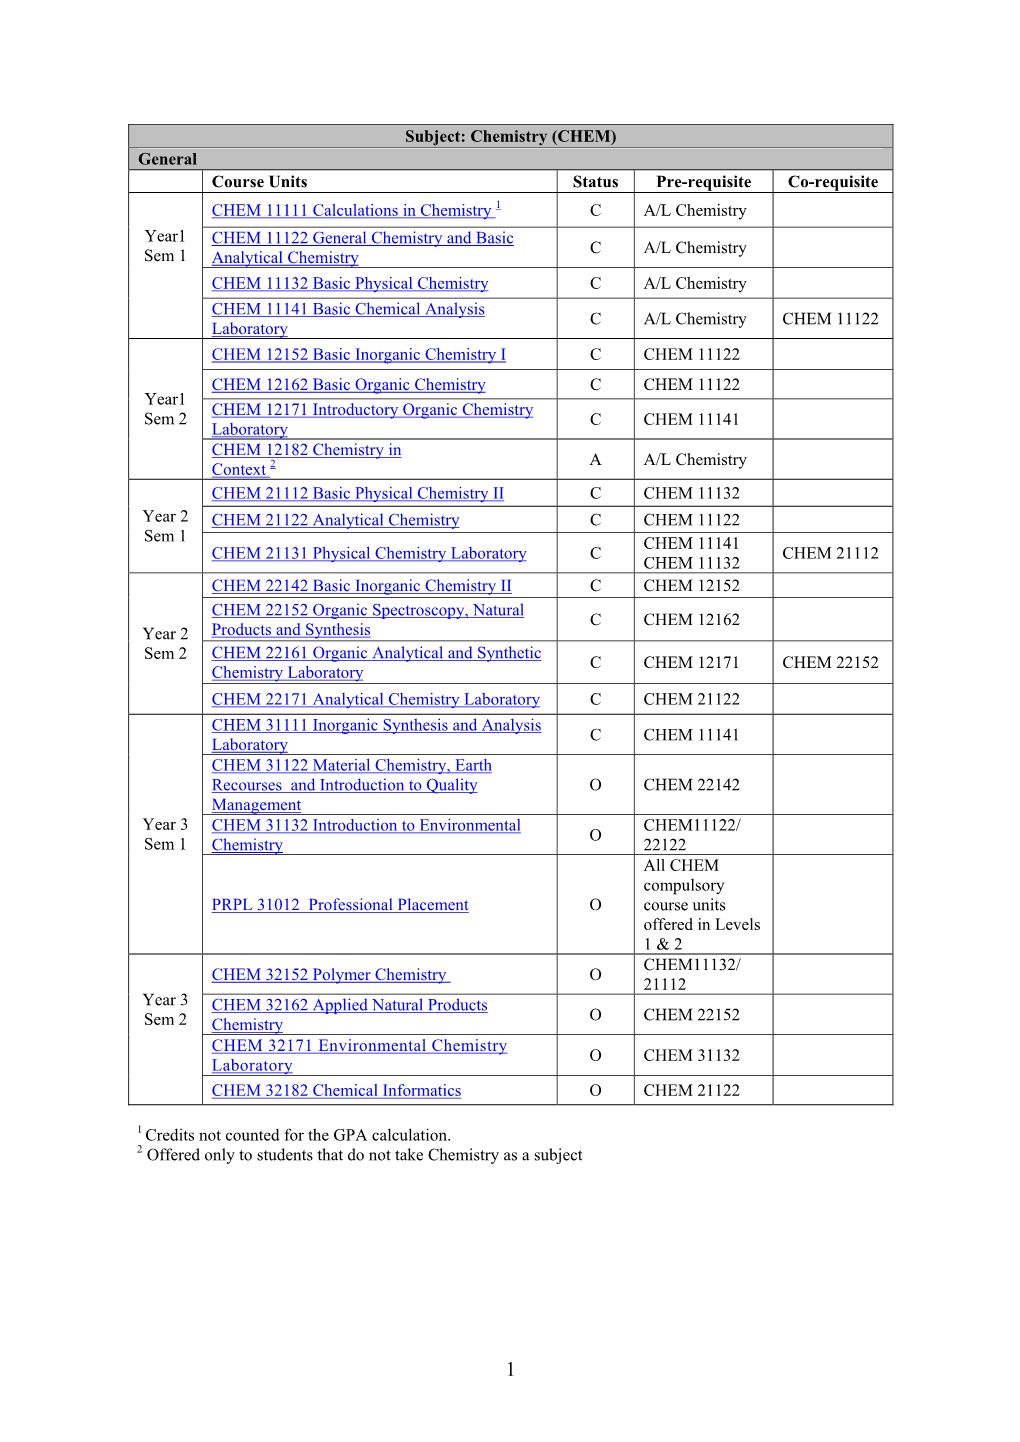 Subject: Chemistry (CHEM) General Course Units Status Pre-Requisite